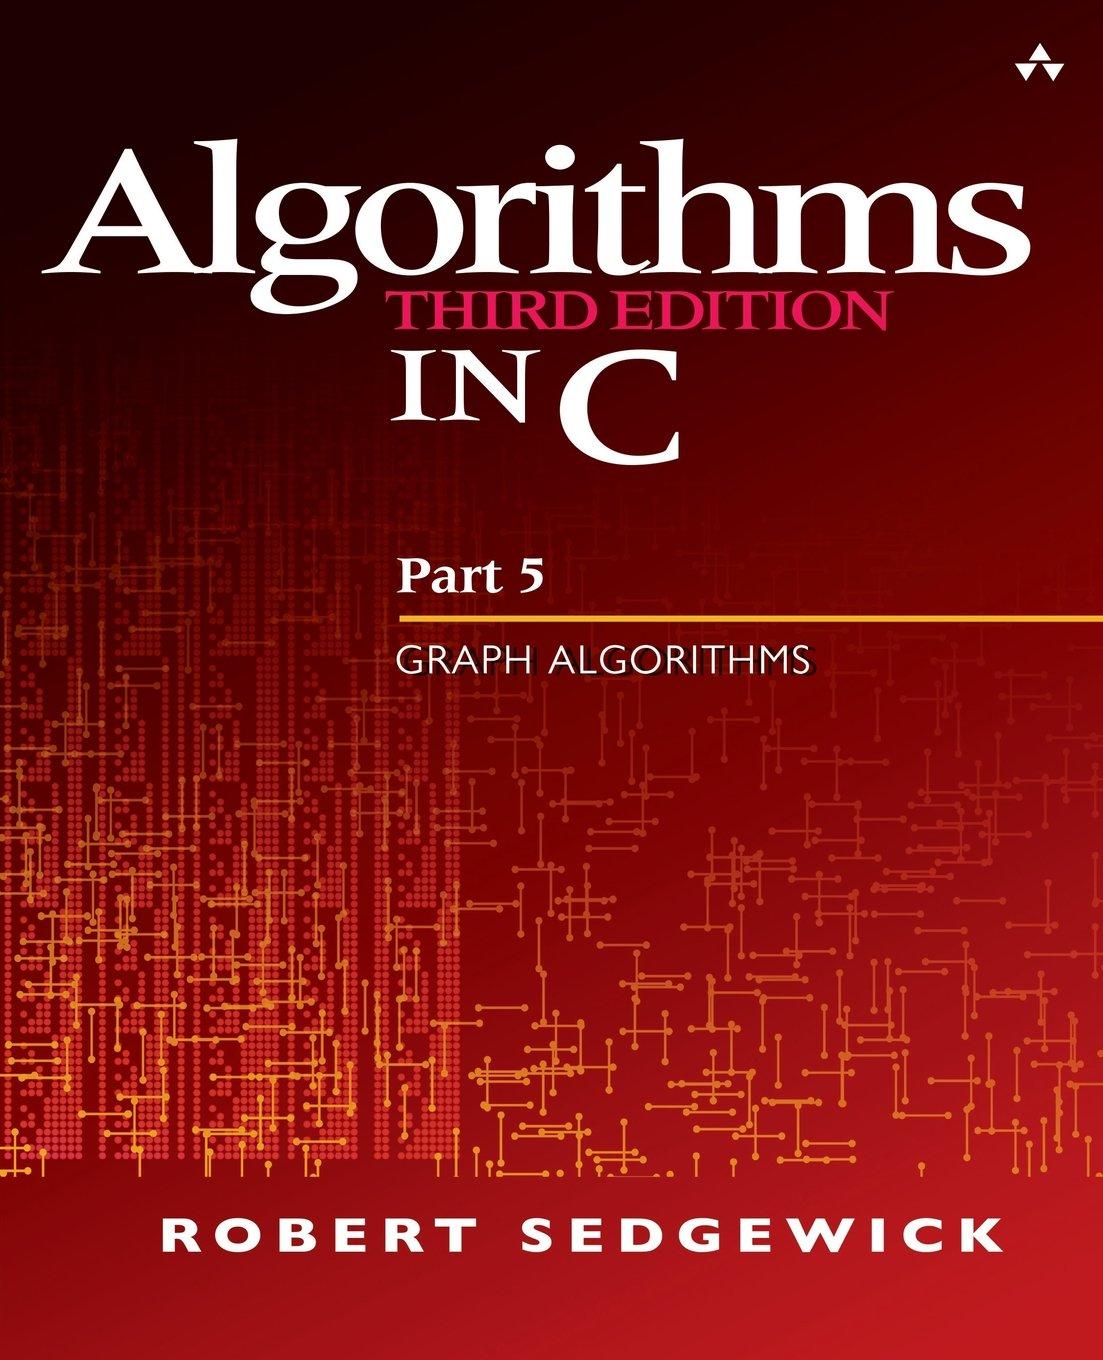 algorithms in c part 5 graph algorithms 3rd edition robert sedgewick 1839381825, 978-1839381829